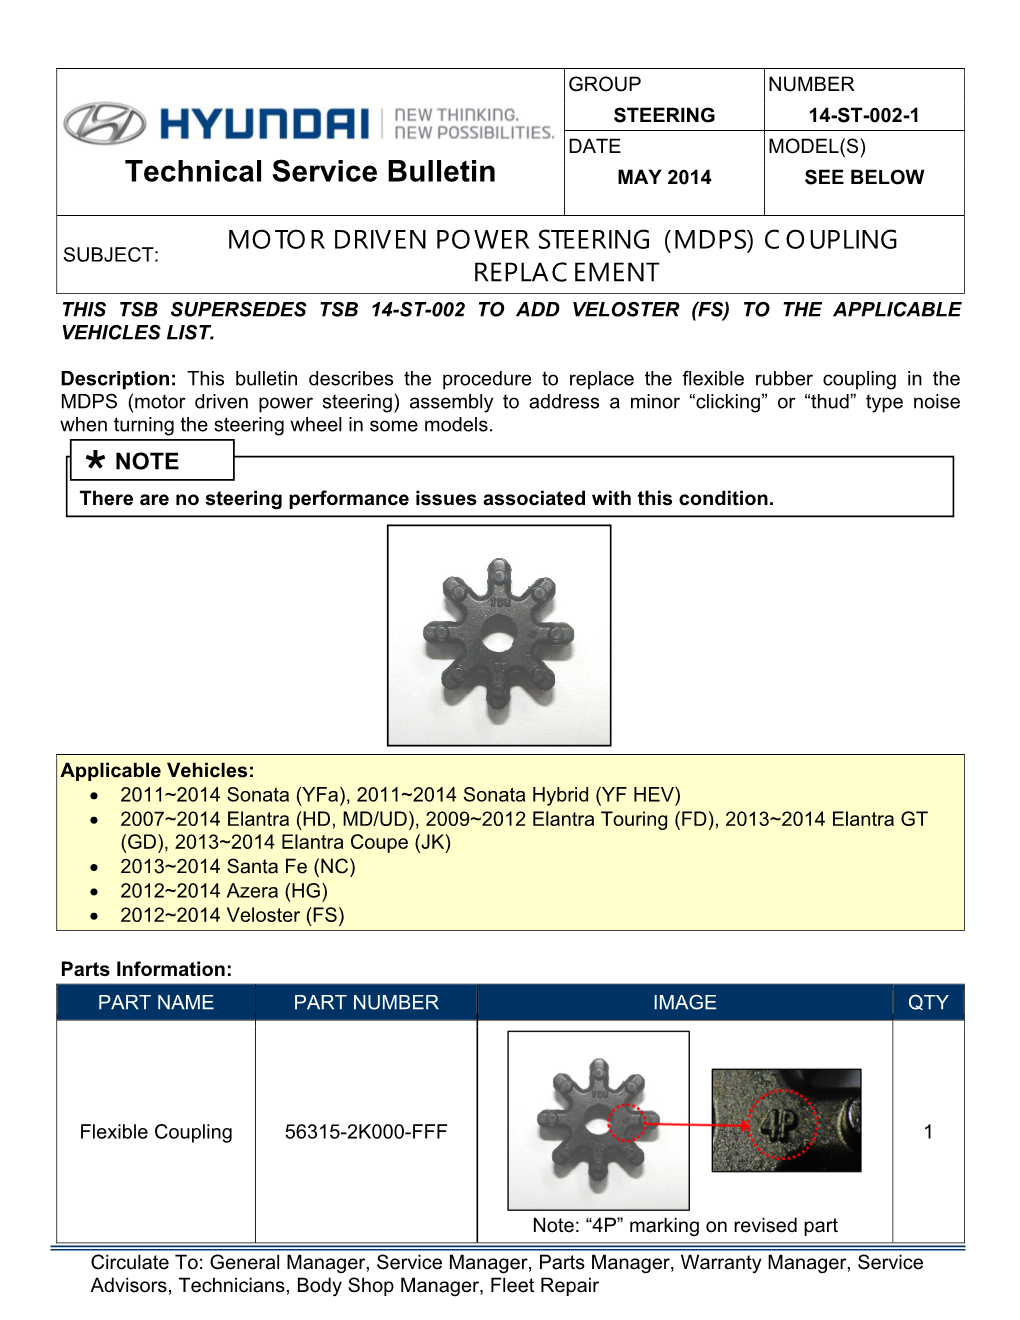 Hyundai TSB 14-ST-002-1: Steering Knock/Click